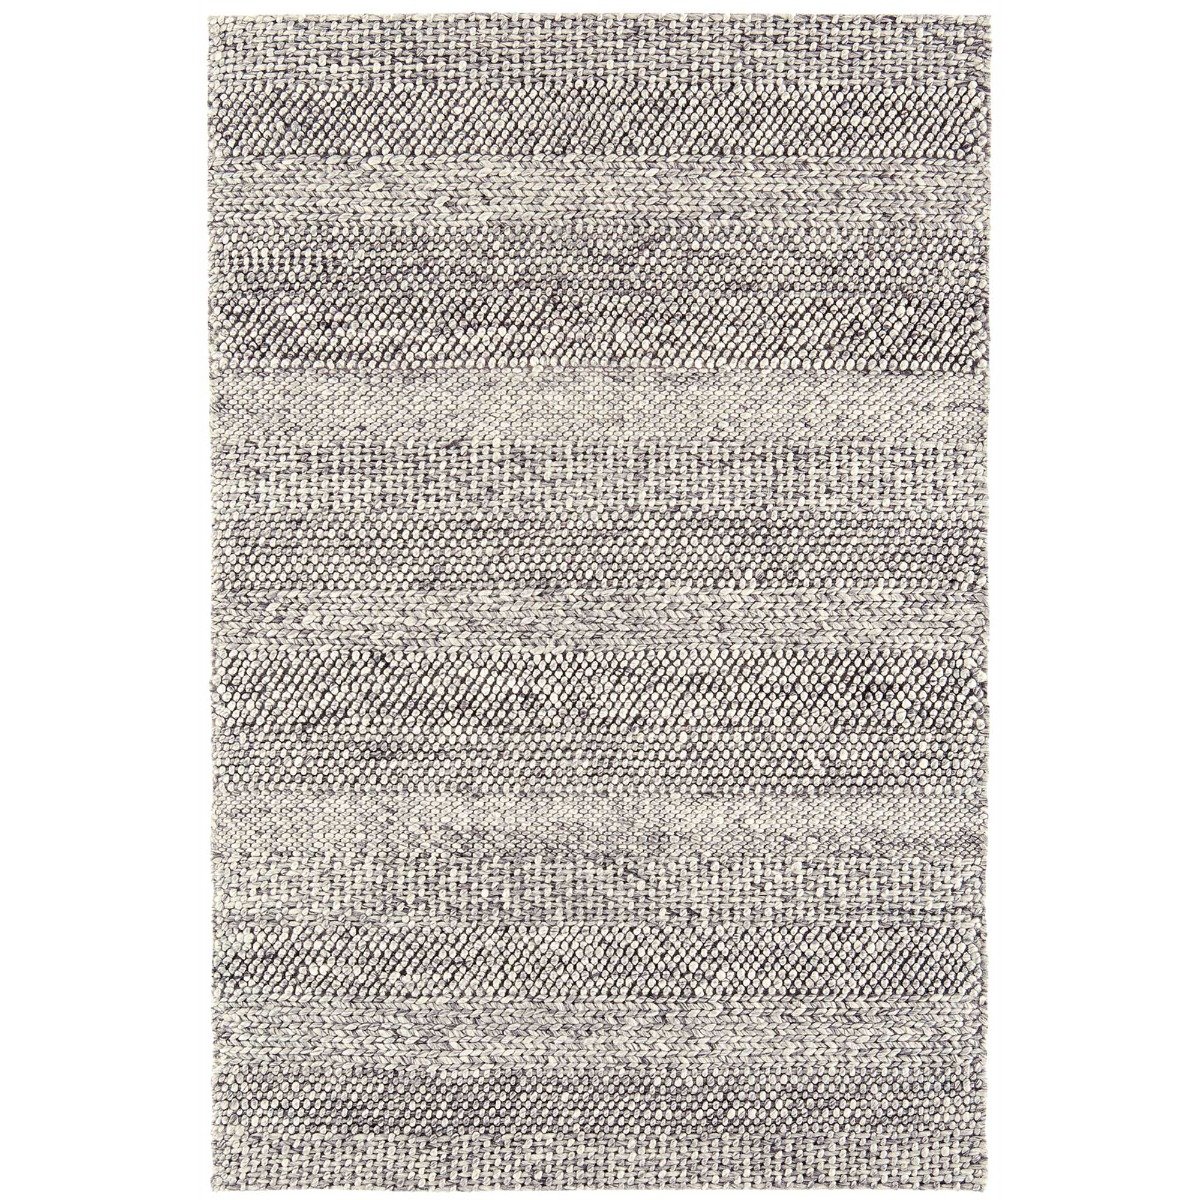 Flori Grey Marl Stripe 120x170cm Rug, Square Wool Blend | W120cm | Barker & Stonehouse